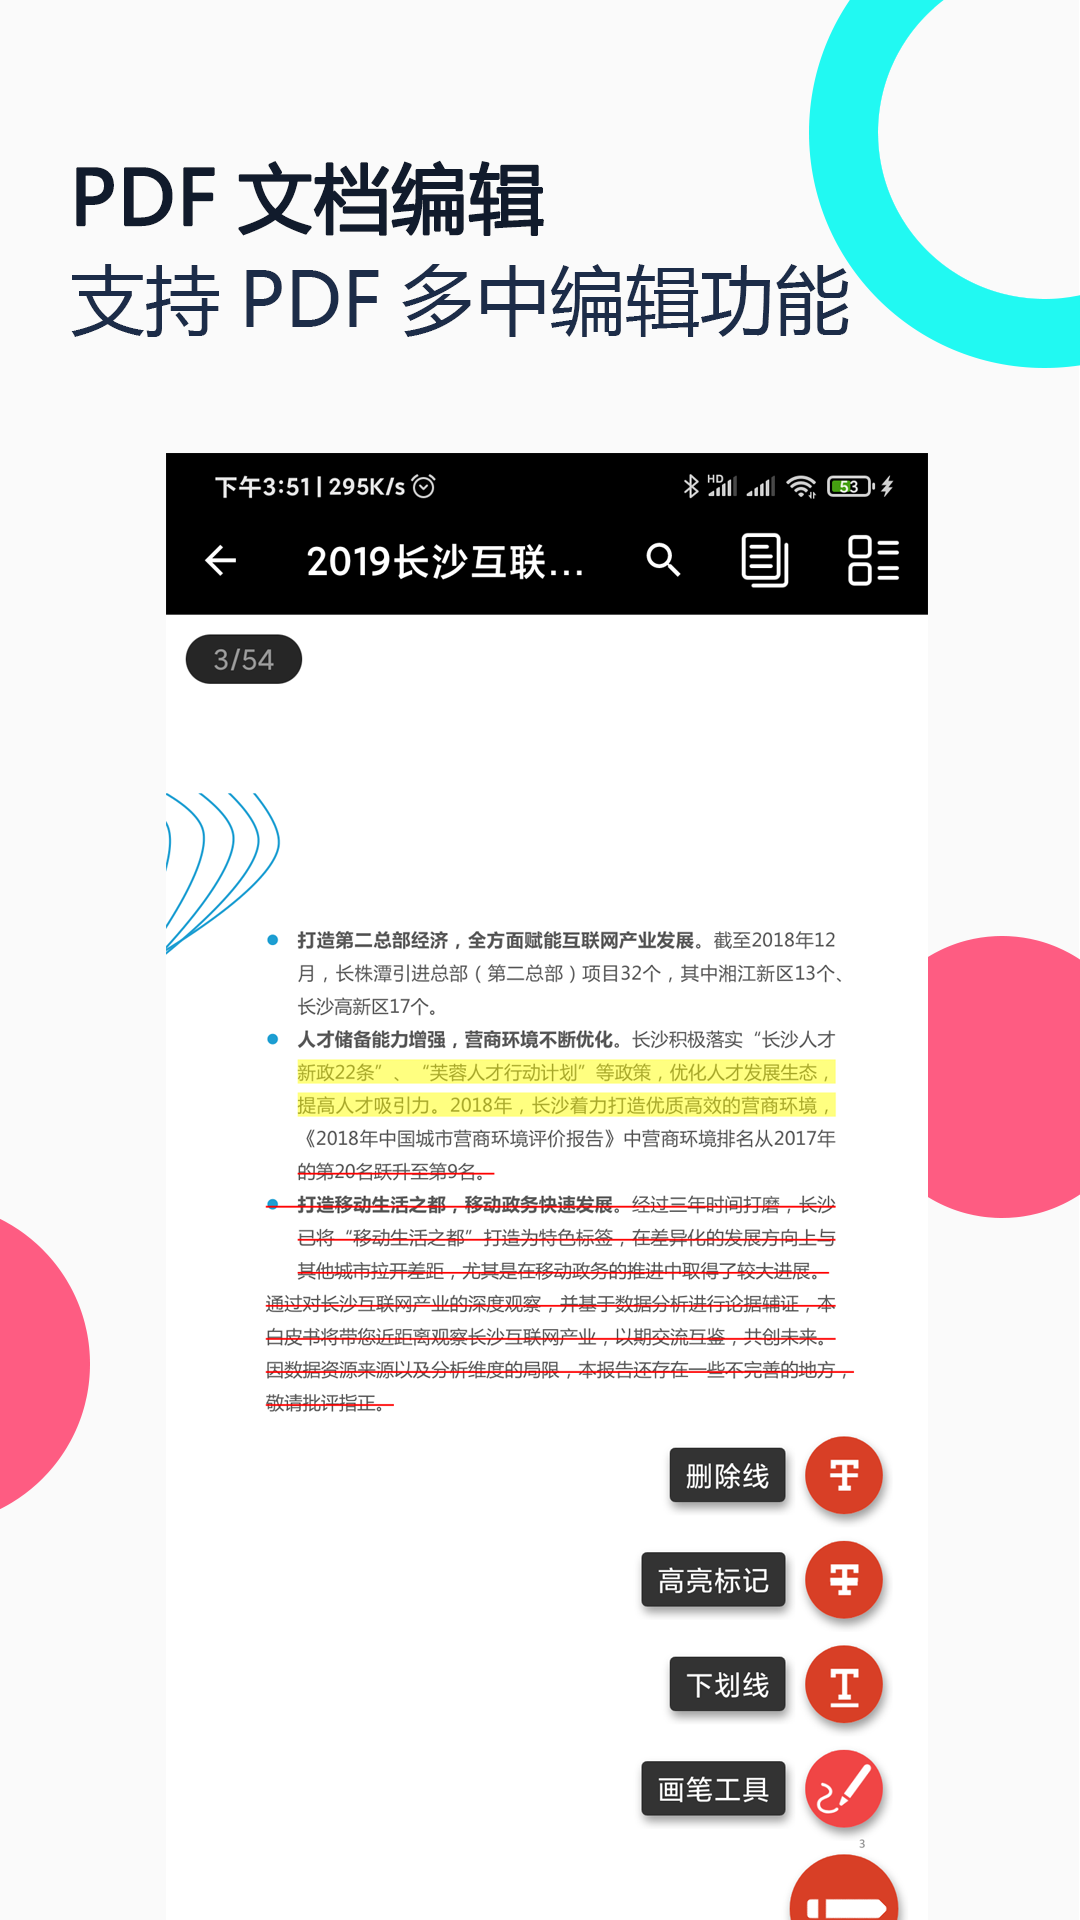 PDF全能王